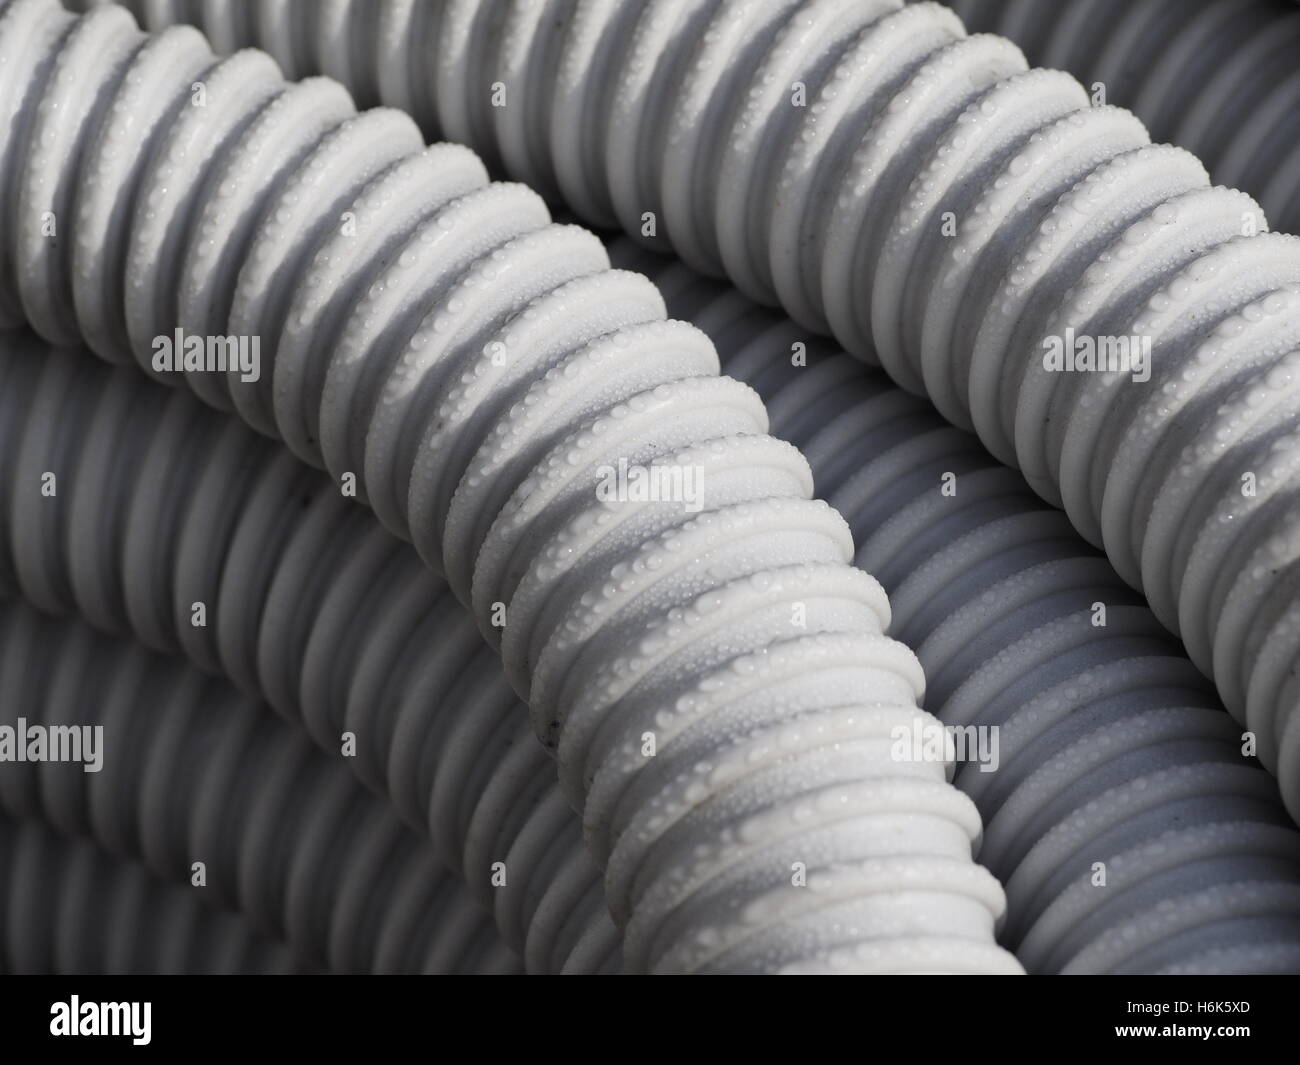 KAOFLEX flexible spiral cable management hose Stock Photo